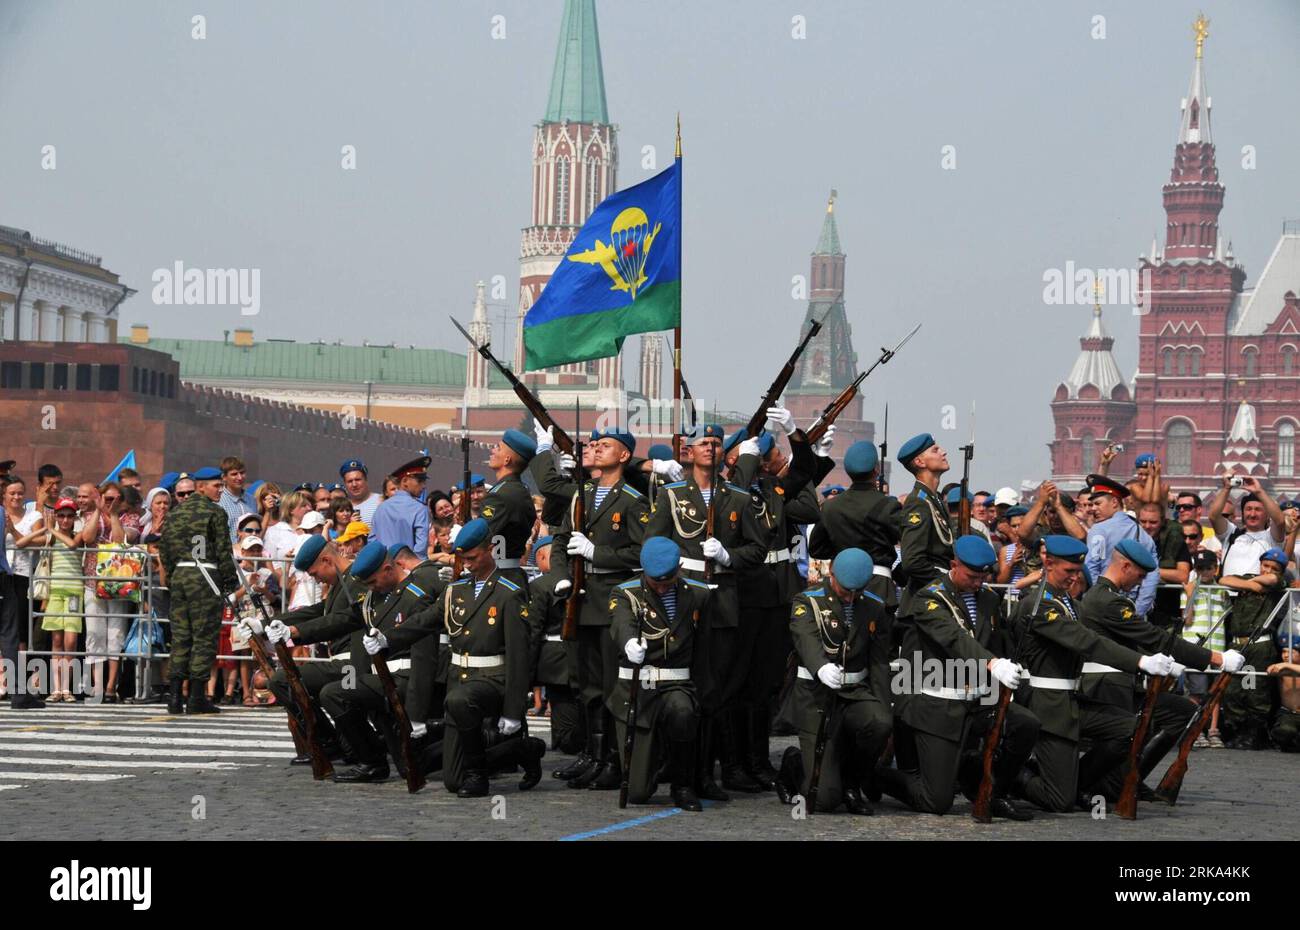 Bildnummer: 54269065 Datum: 02.08.2010 Copyright: imago/Xinhua (100802) -- MOSCA, 2 agosto 2010 (Xinhua) -- le guardie d'onore del paracadutista russo si esibiscono durante una cerimonia di parata per celebrare il 80 ° anniversario della creazione delle forze paracadutisti russe, sulla Piazza Rossa a Mosca, Russia, 2 agosto 2010. (Xinhua/Liu Kai) (zw) (4)RUSSIA-MOSCA-PARACADUTISTI-ANNIVERSARY PUBLICATIONxNOTxINxCHN Gesellschaft Jubiläum Militär RUS Fallschirmjäger Soldat kbdig xng 2010 quer o0 totale Bildnummer 54269065 Data 02 08 2010 Copyright Imago XINHUA Mosca Aug 2 2010 XINHUA Russian Paratrooper HONOR Guards Foto Stock